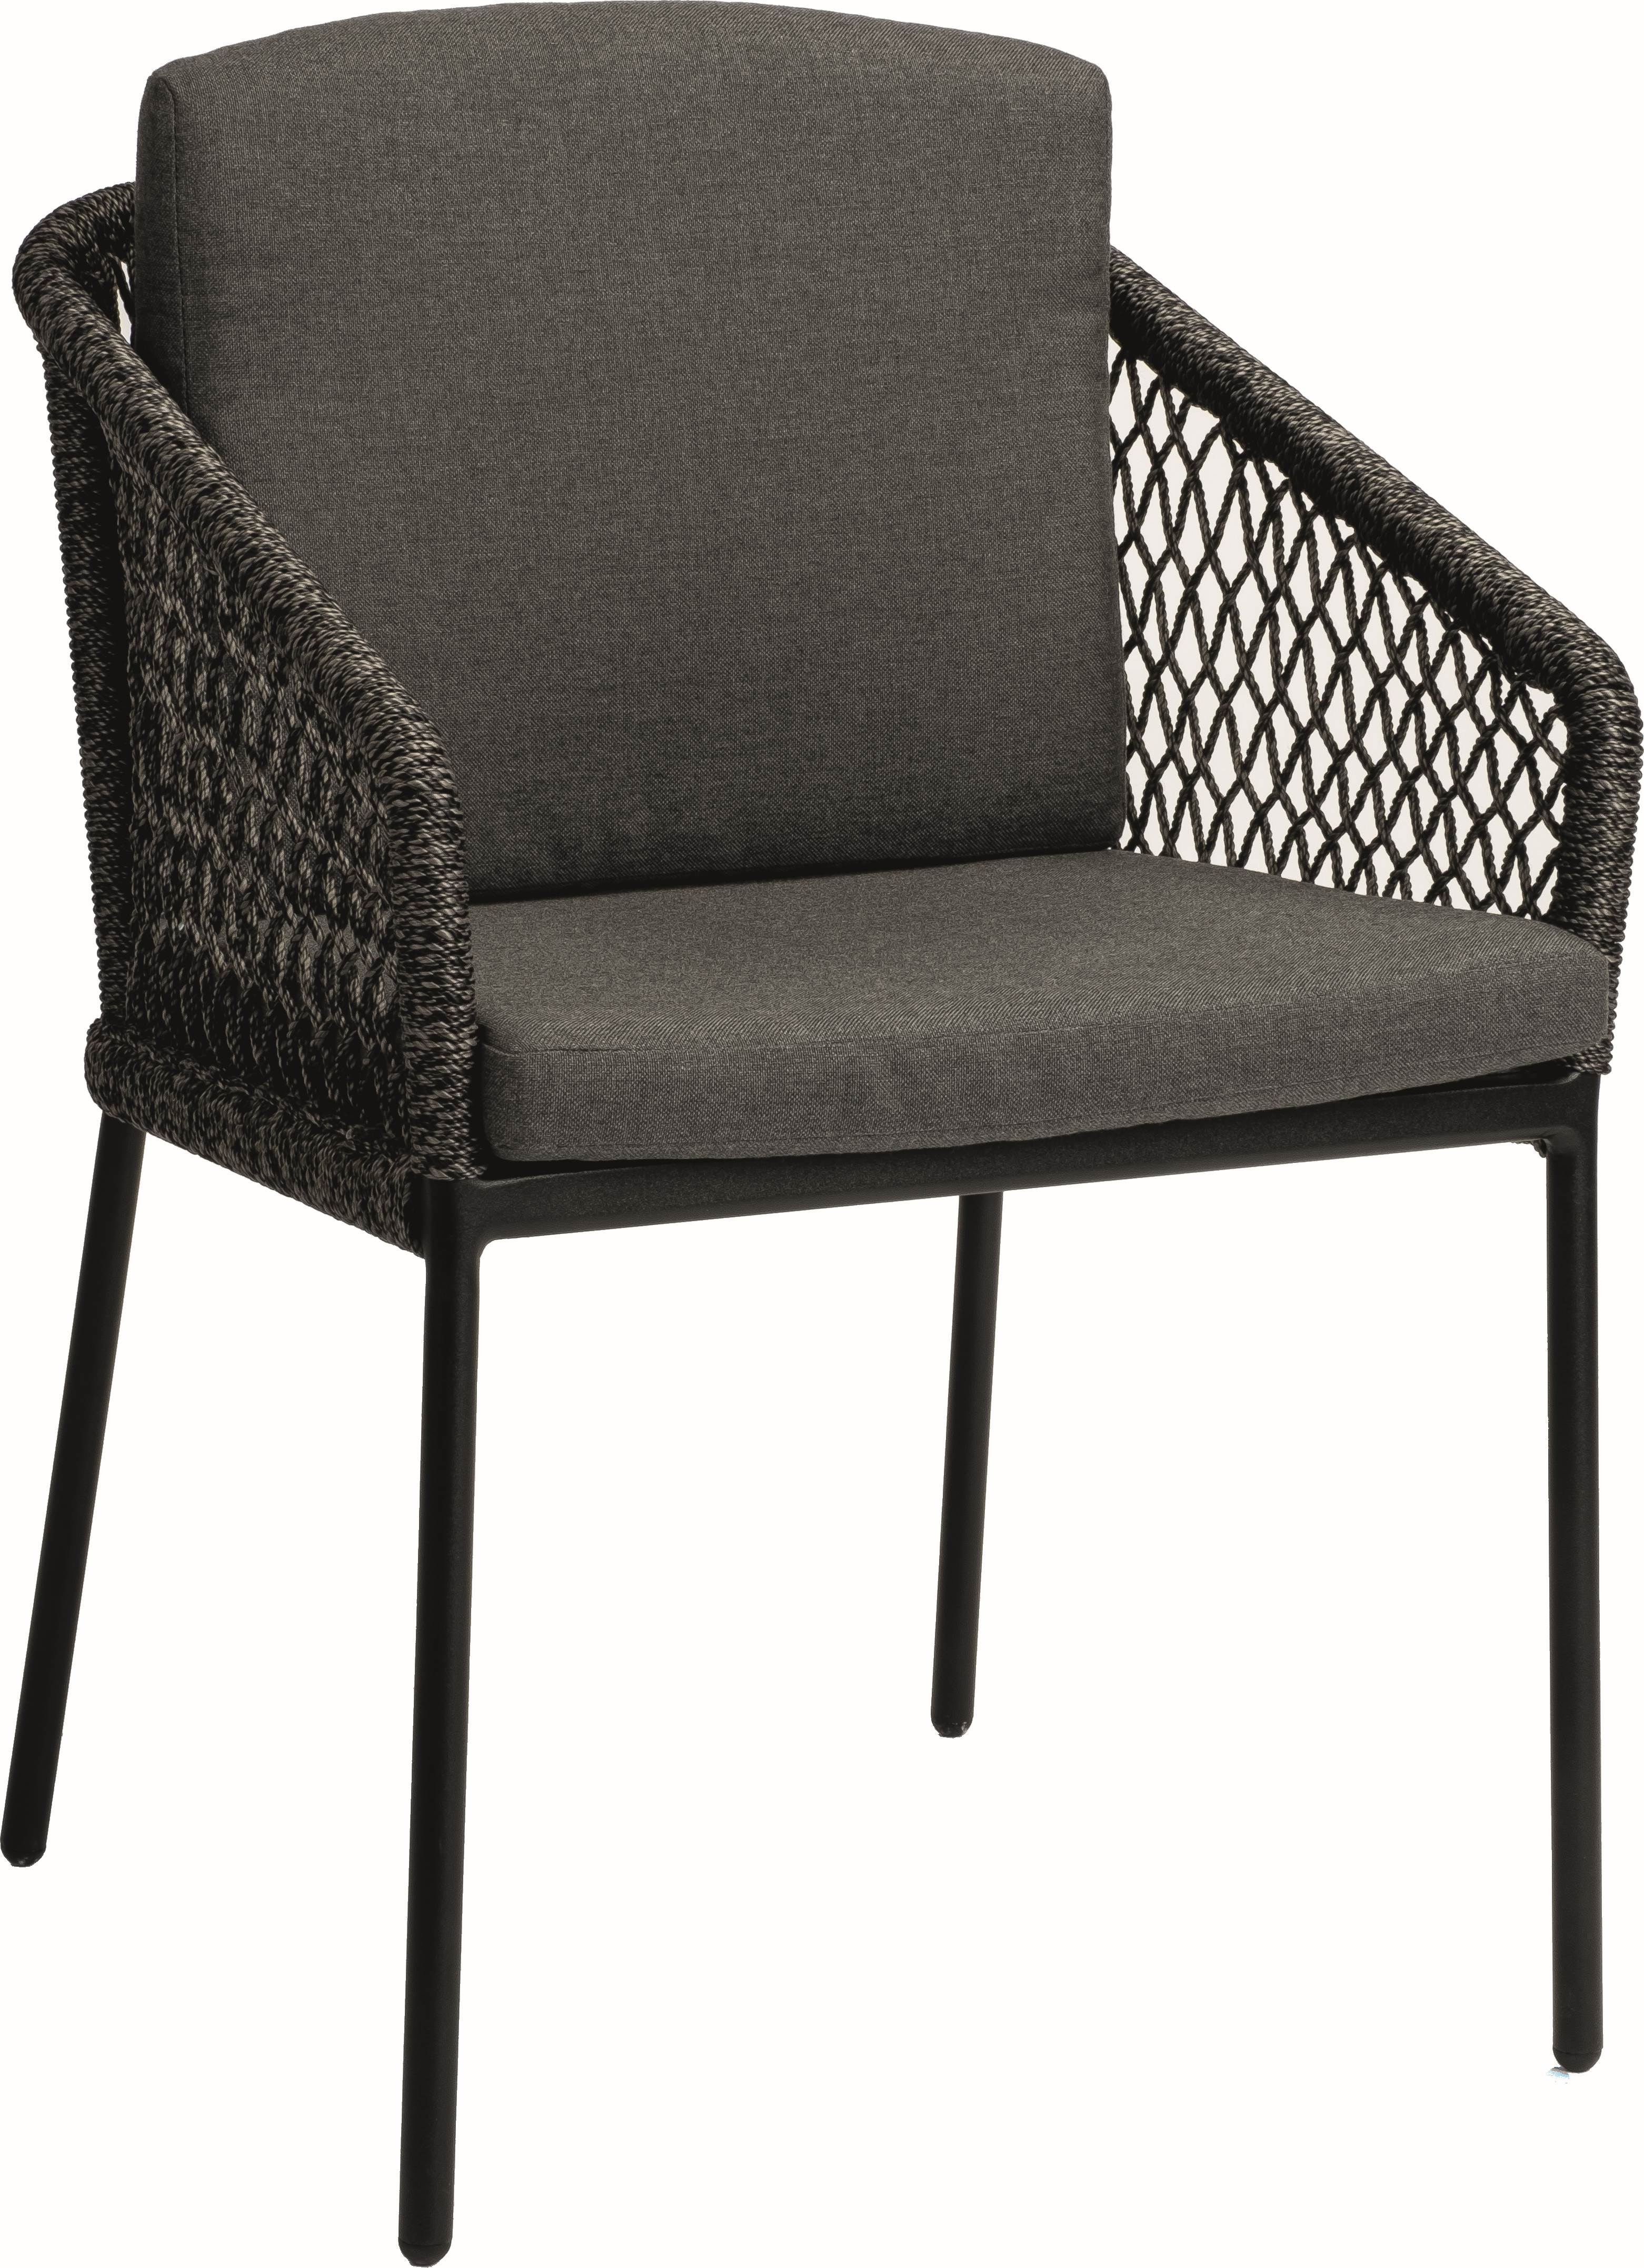 STERN Sessel ODEA Aluminium schwarz matt/Kordel pepper/Kissen 100% Polyacryl seidenschwarz